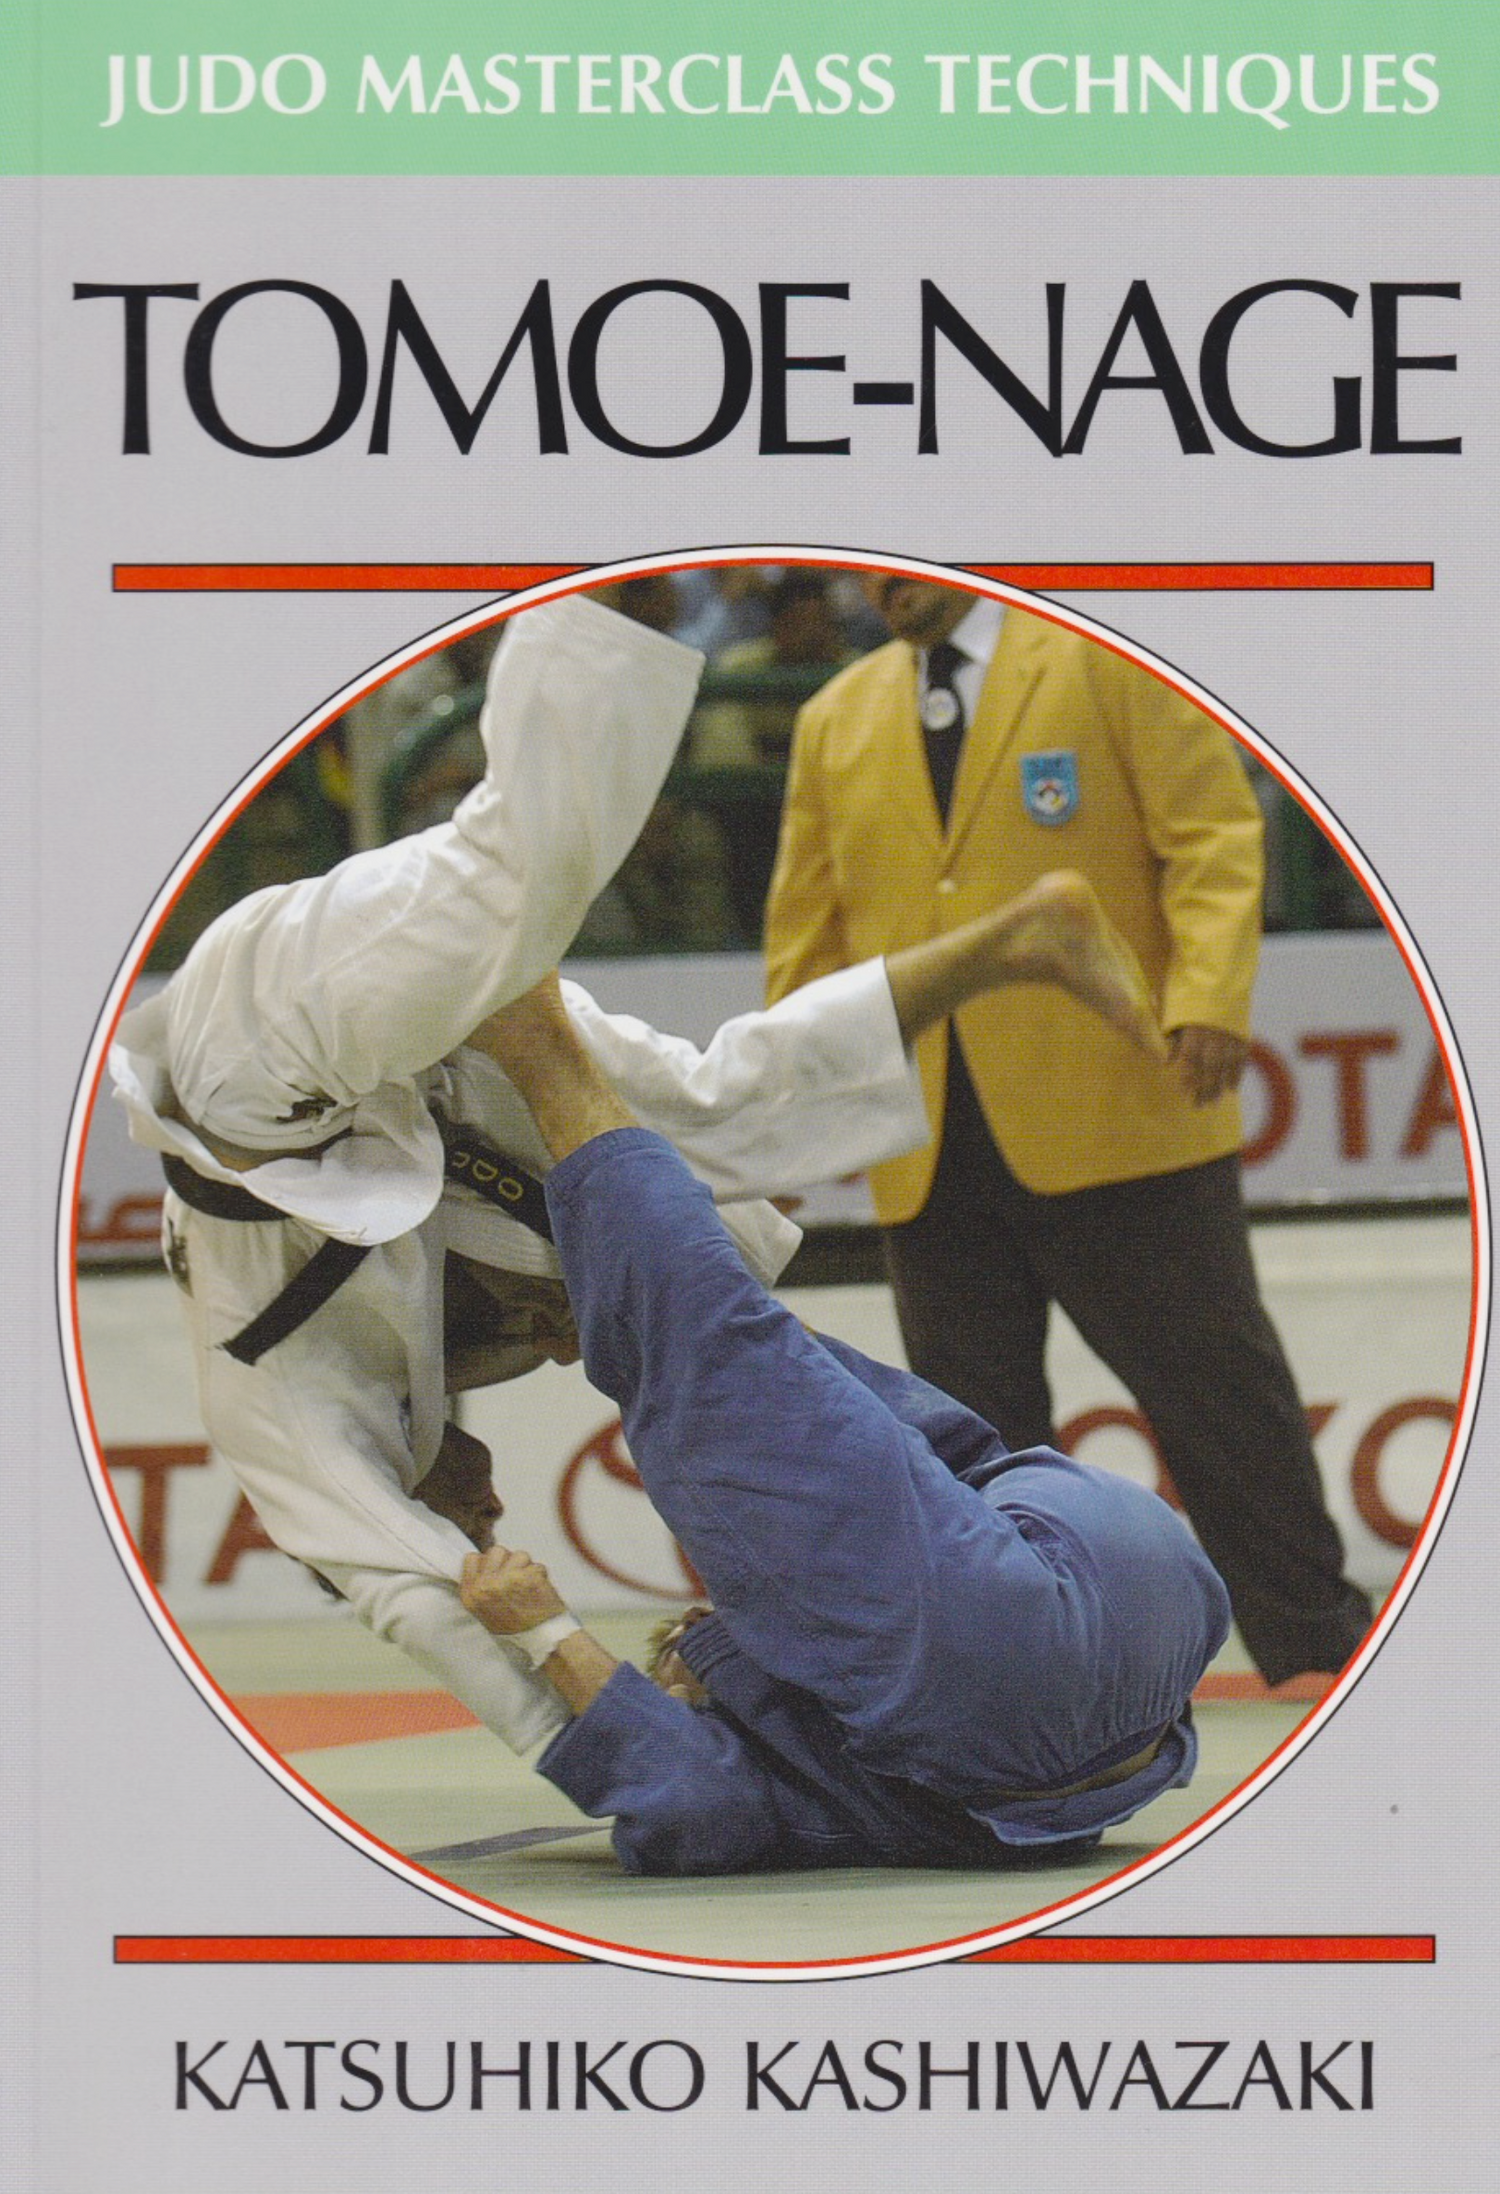 Tomoe Nage: Judo Masterclass Book by Katsuhiko Kashiwazaki - Budovideos Inc